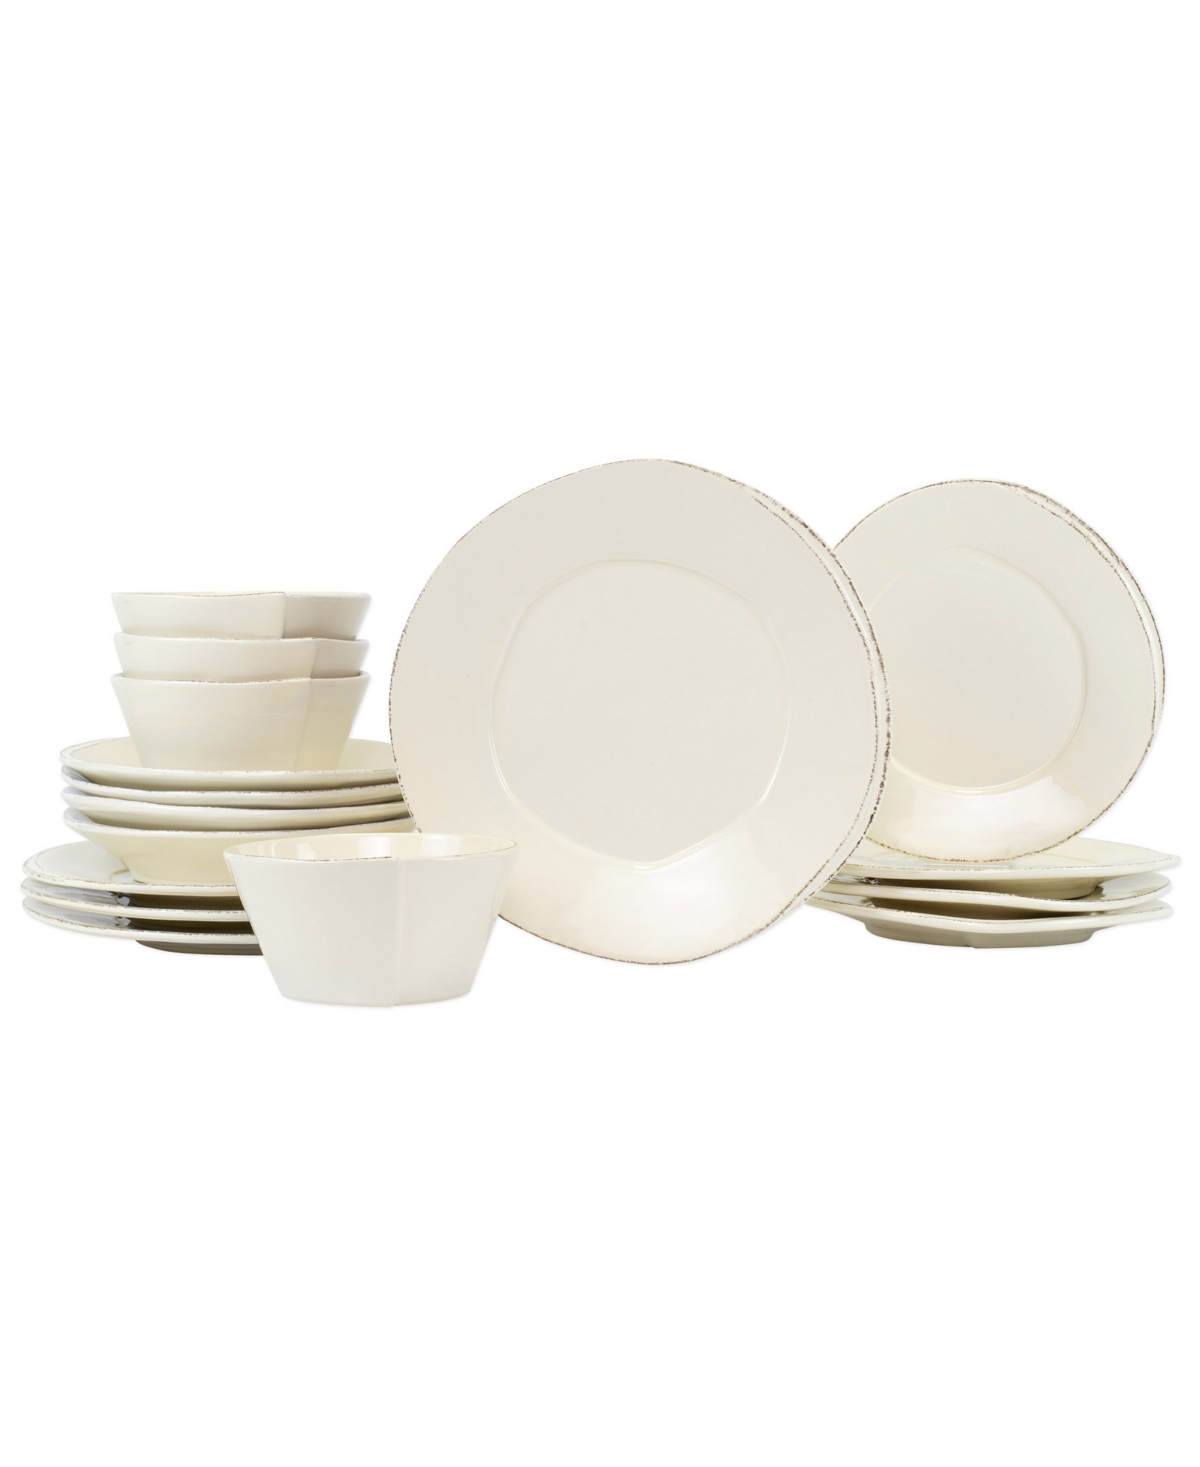 Lastra 16-Pc. Dinnerware Set, Service for 4 - Linen